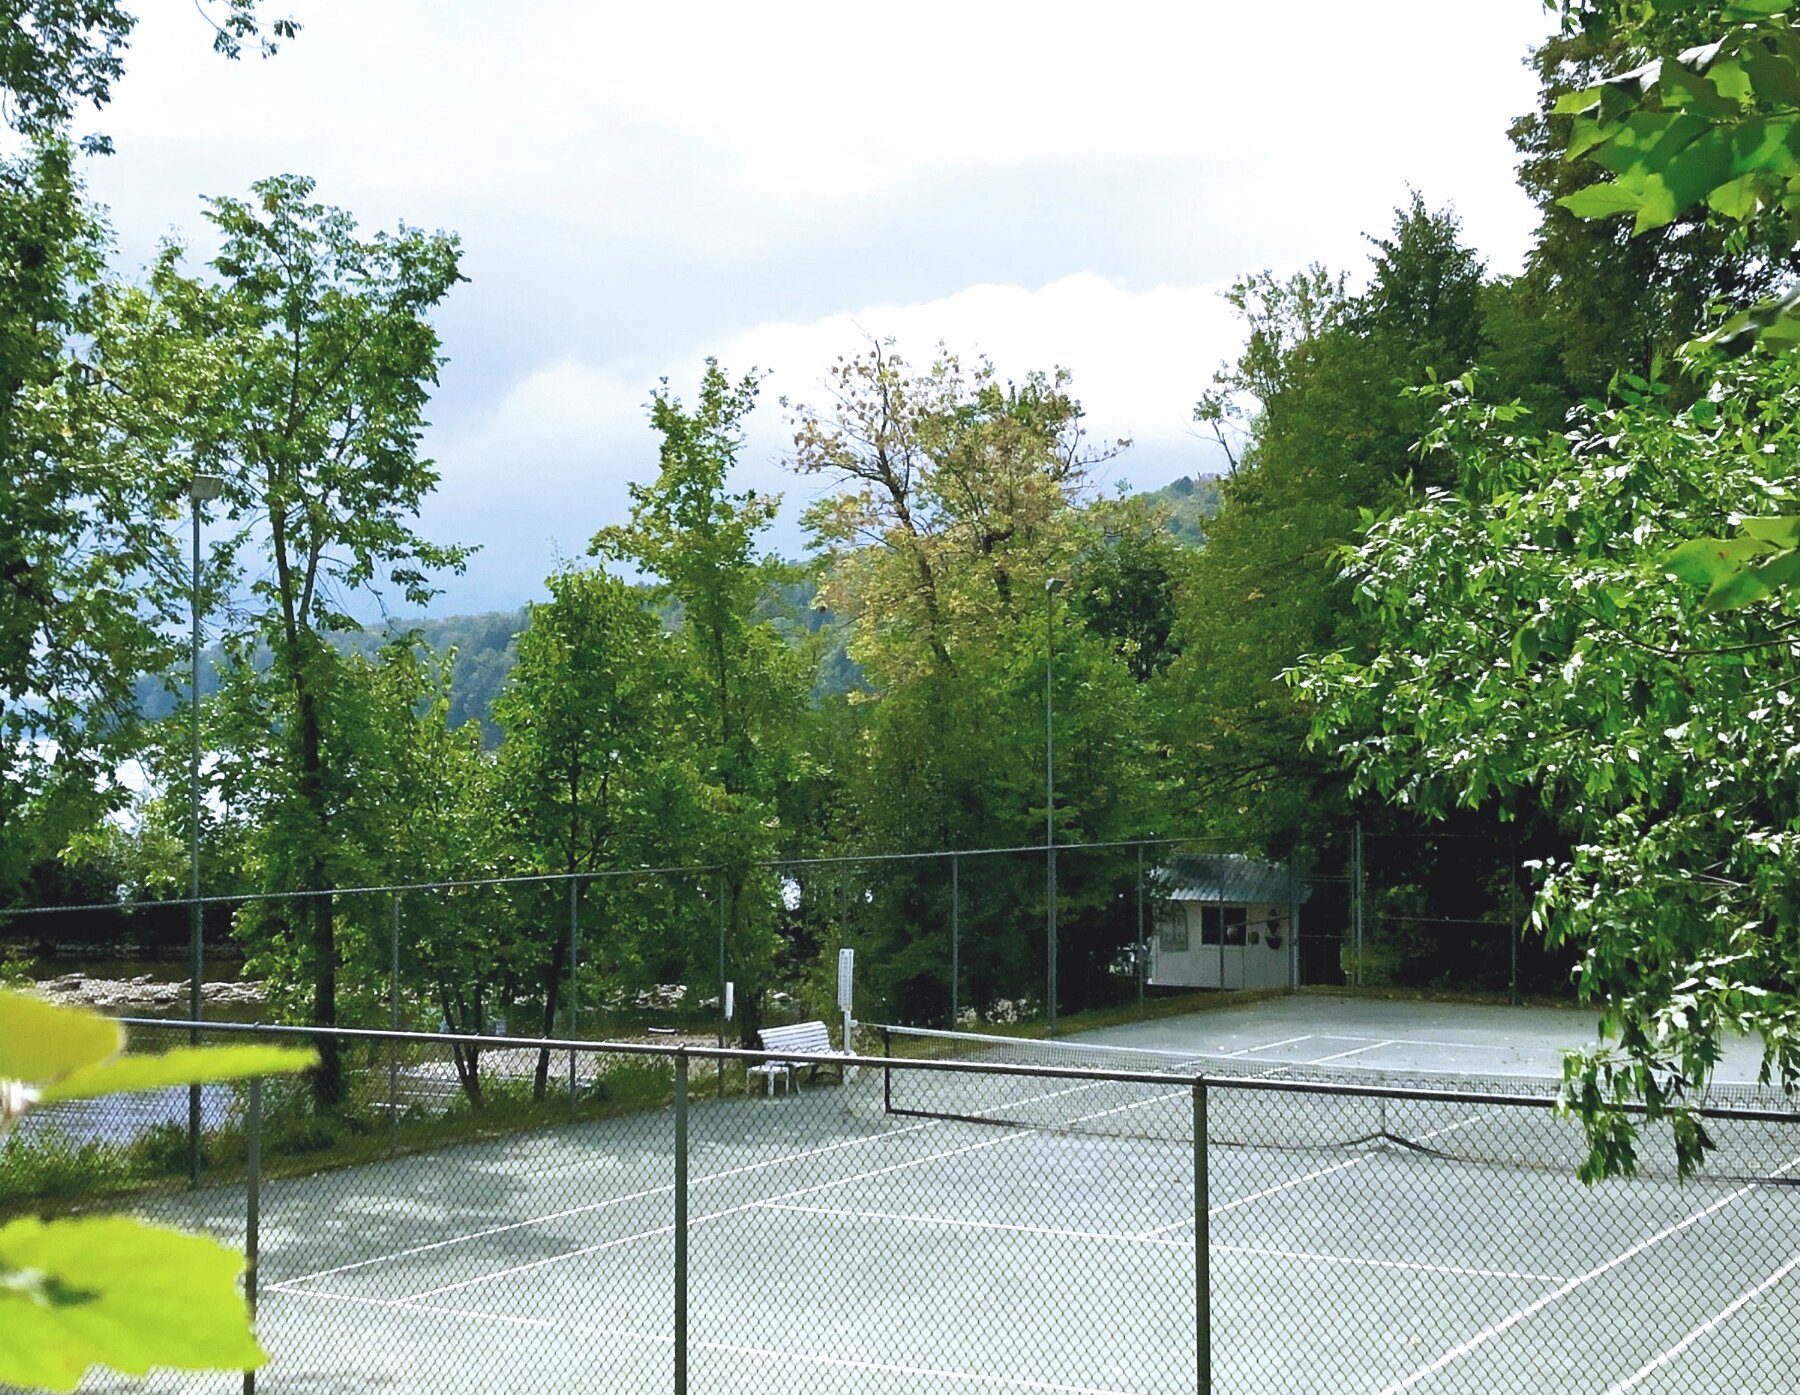 Lakeside tennis court